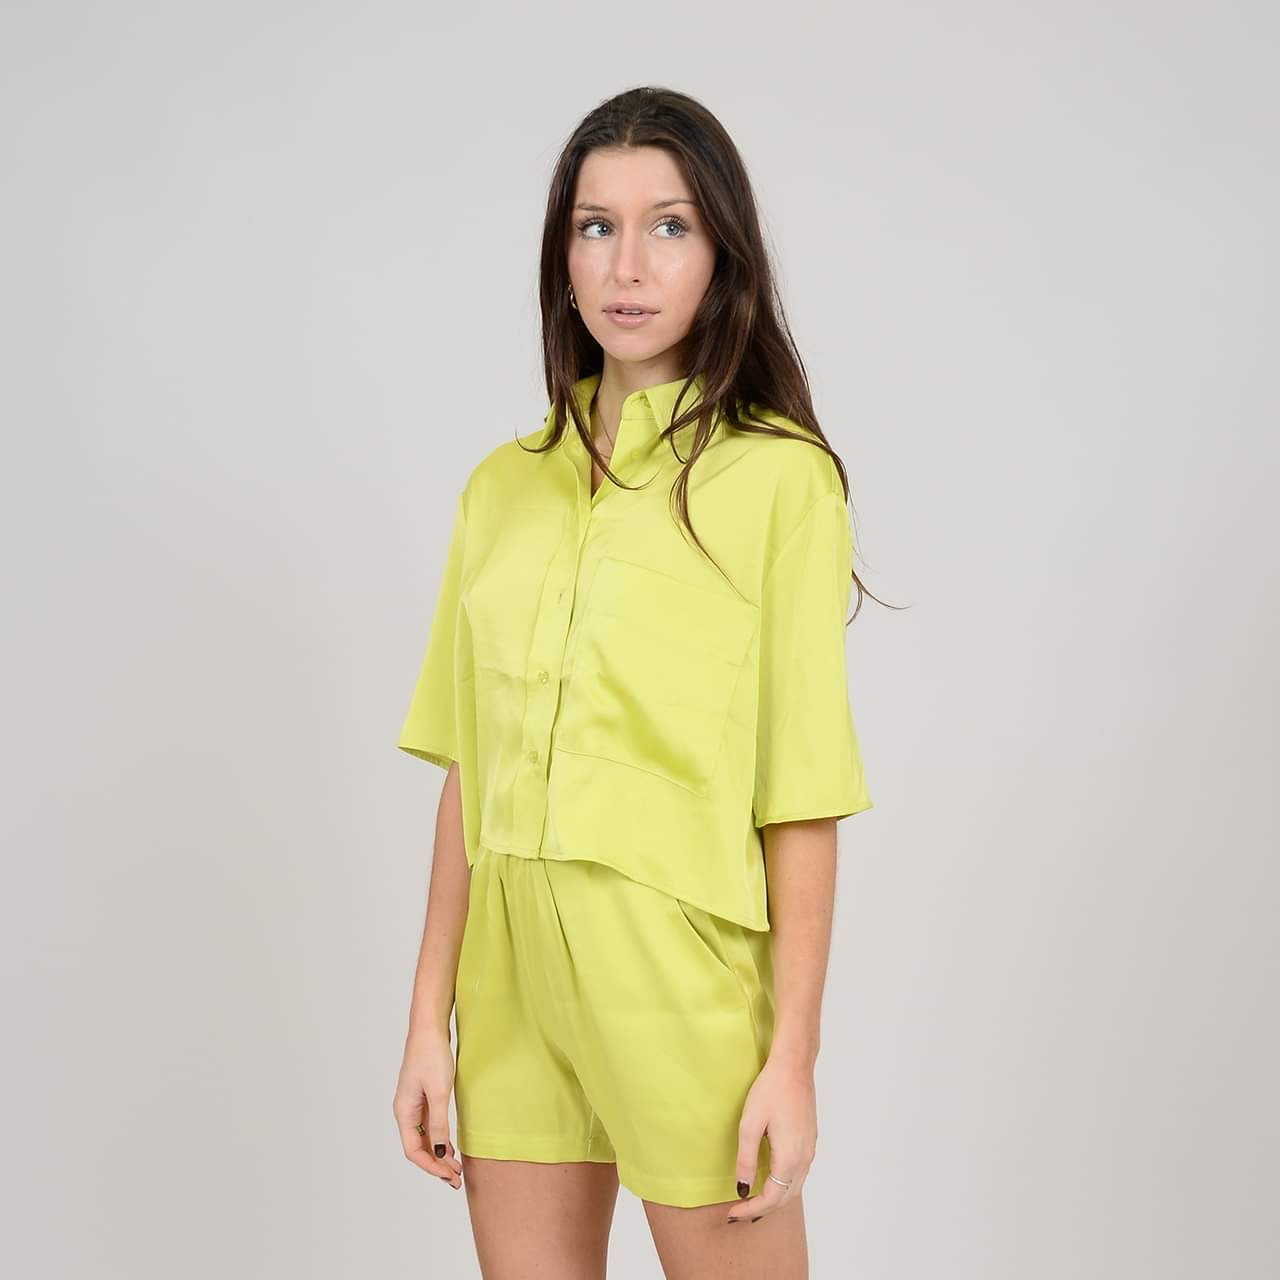 Suzy Sunny Lime Satin Shirt